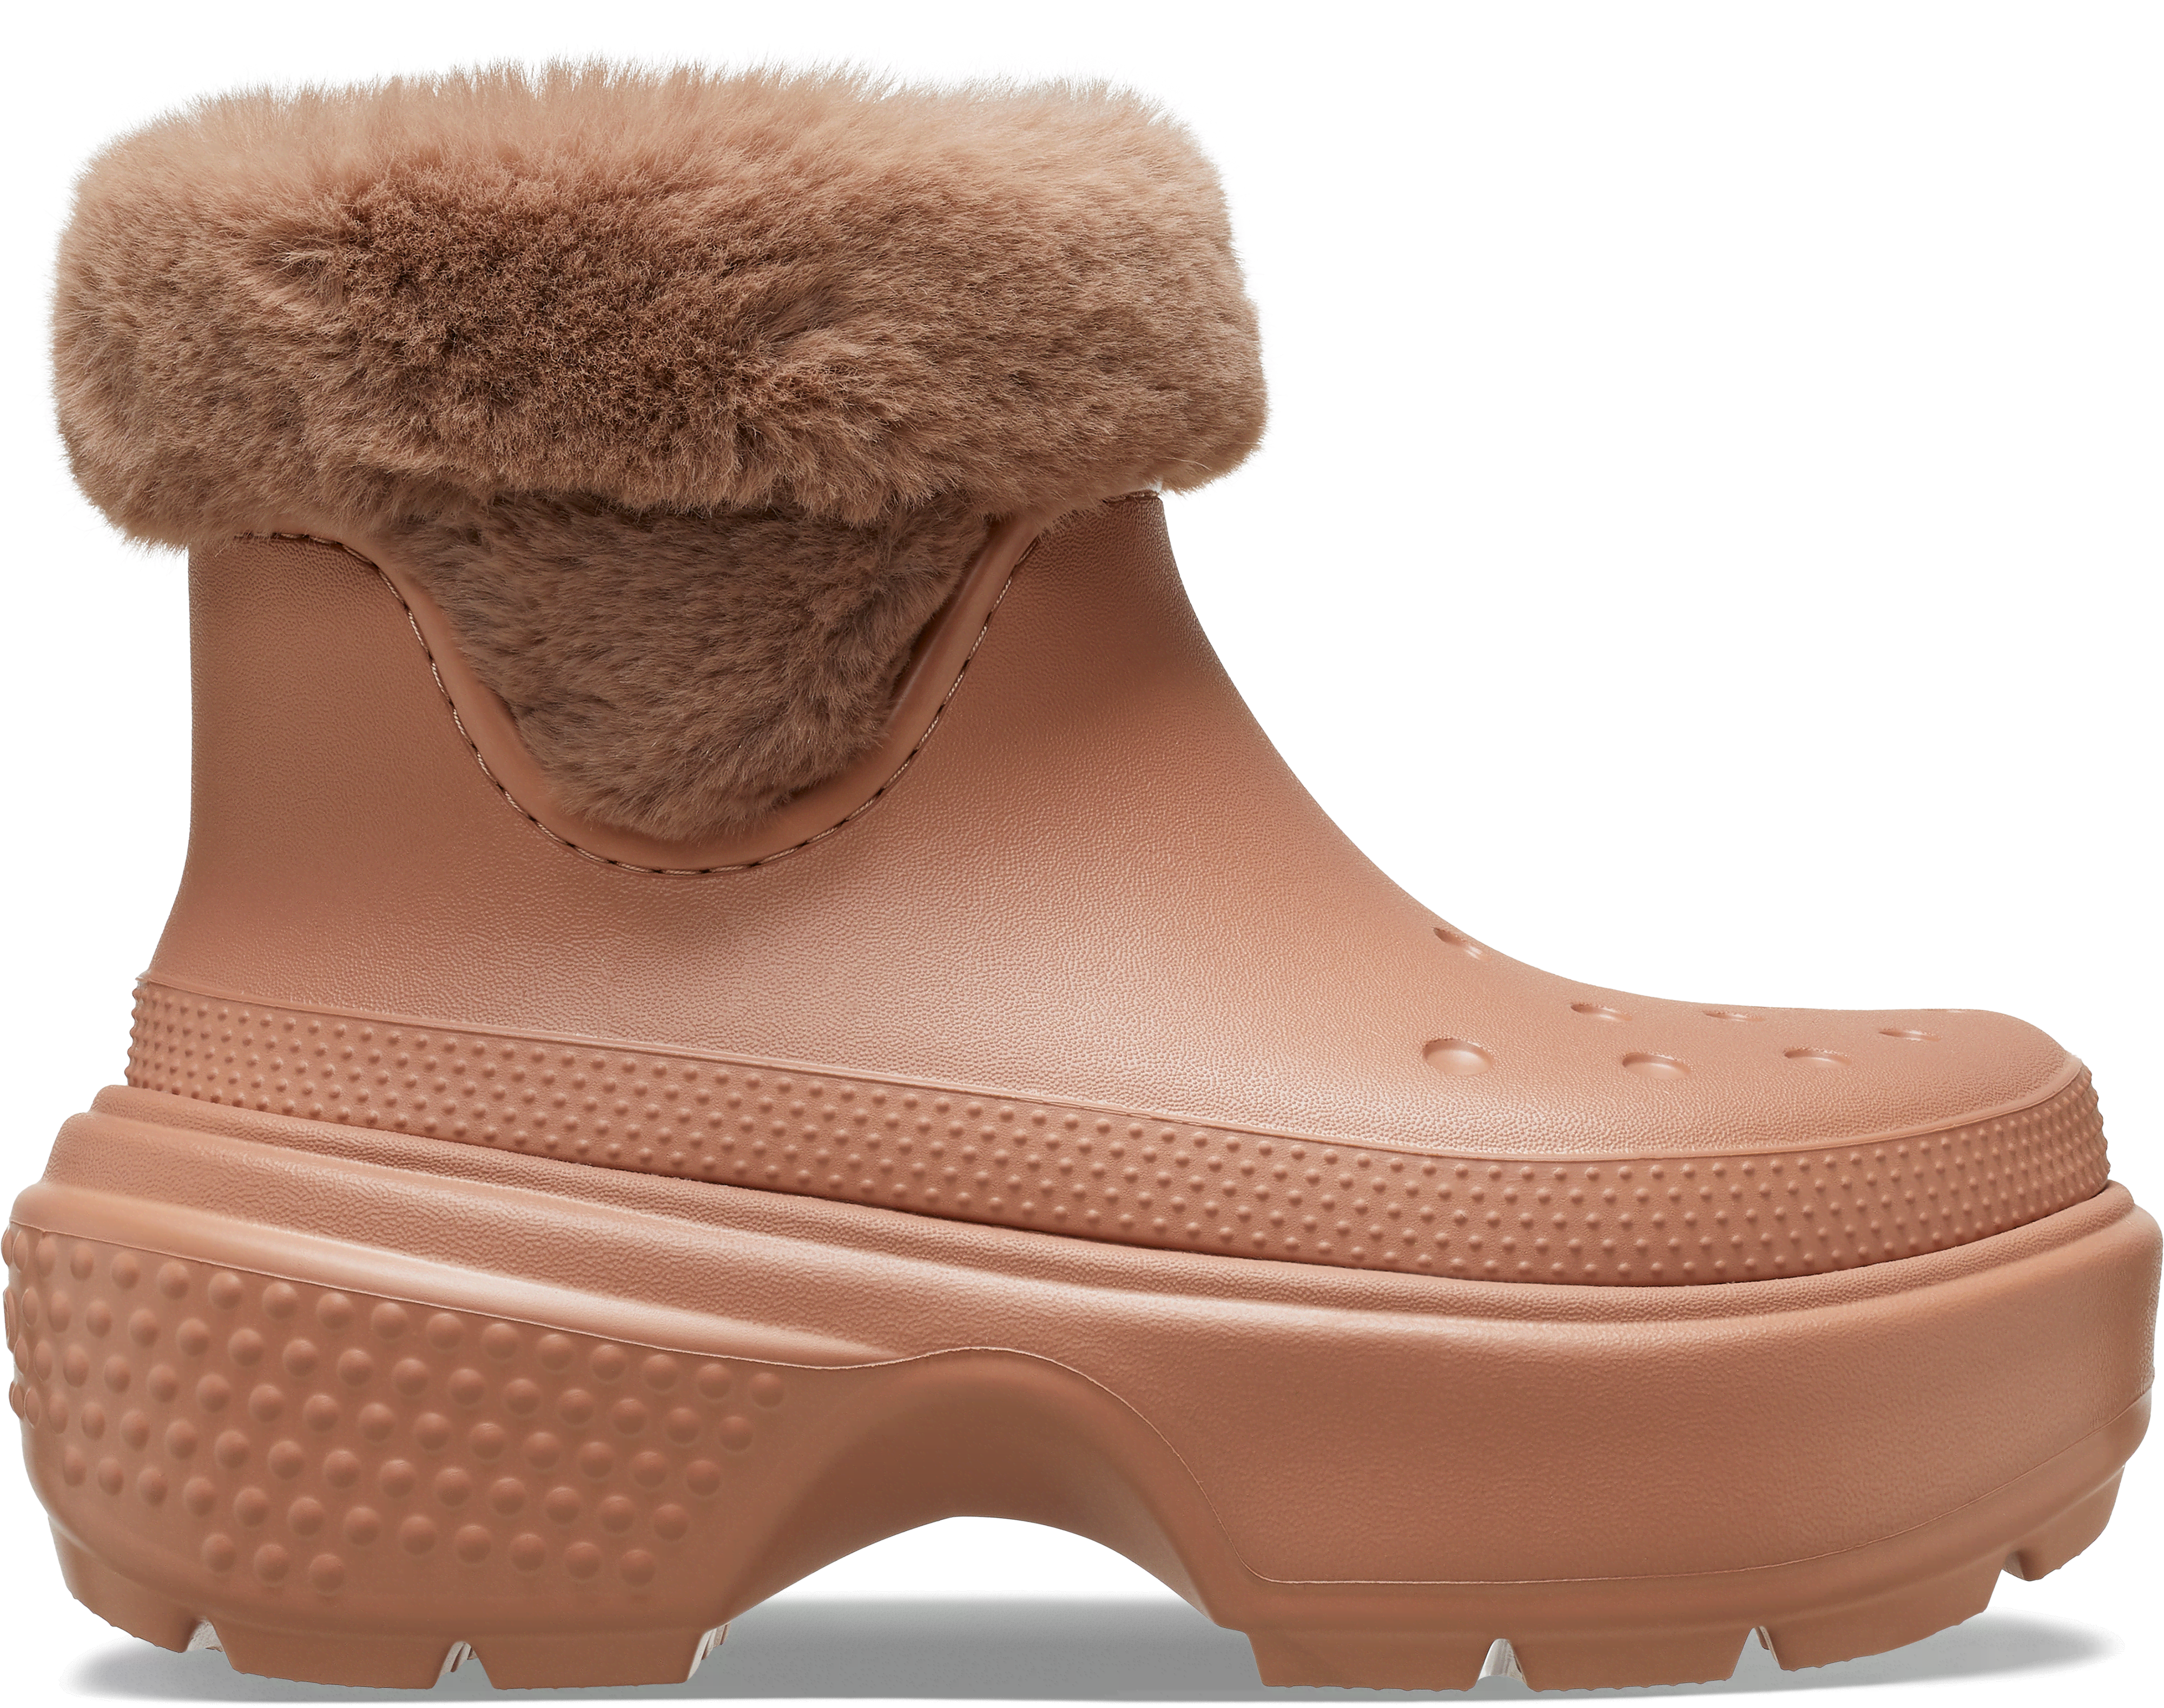 Crocs | Unisex | Stomp Lined Boot | Boots | Cork | M10